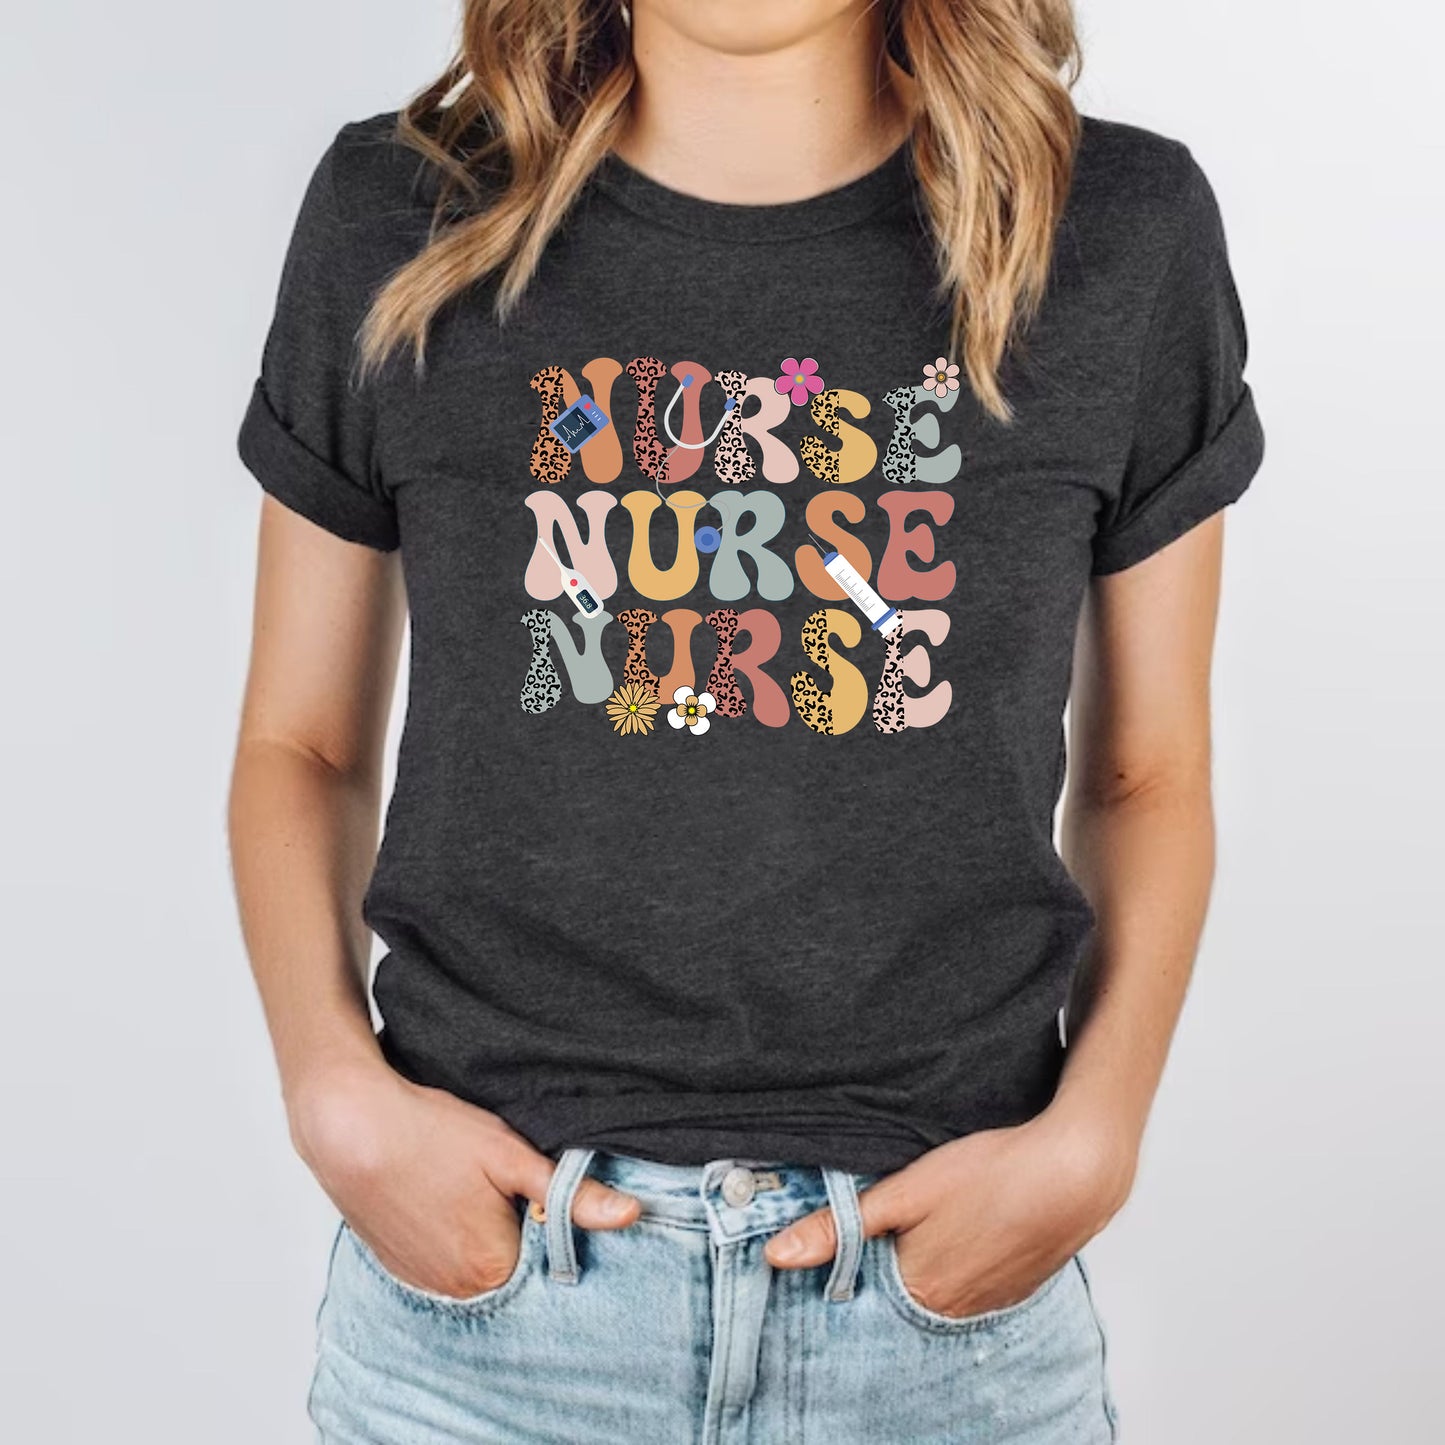 Leopard Nurse Life Future Nurse Custom Nursing Student Graphic T-Shirt